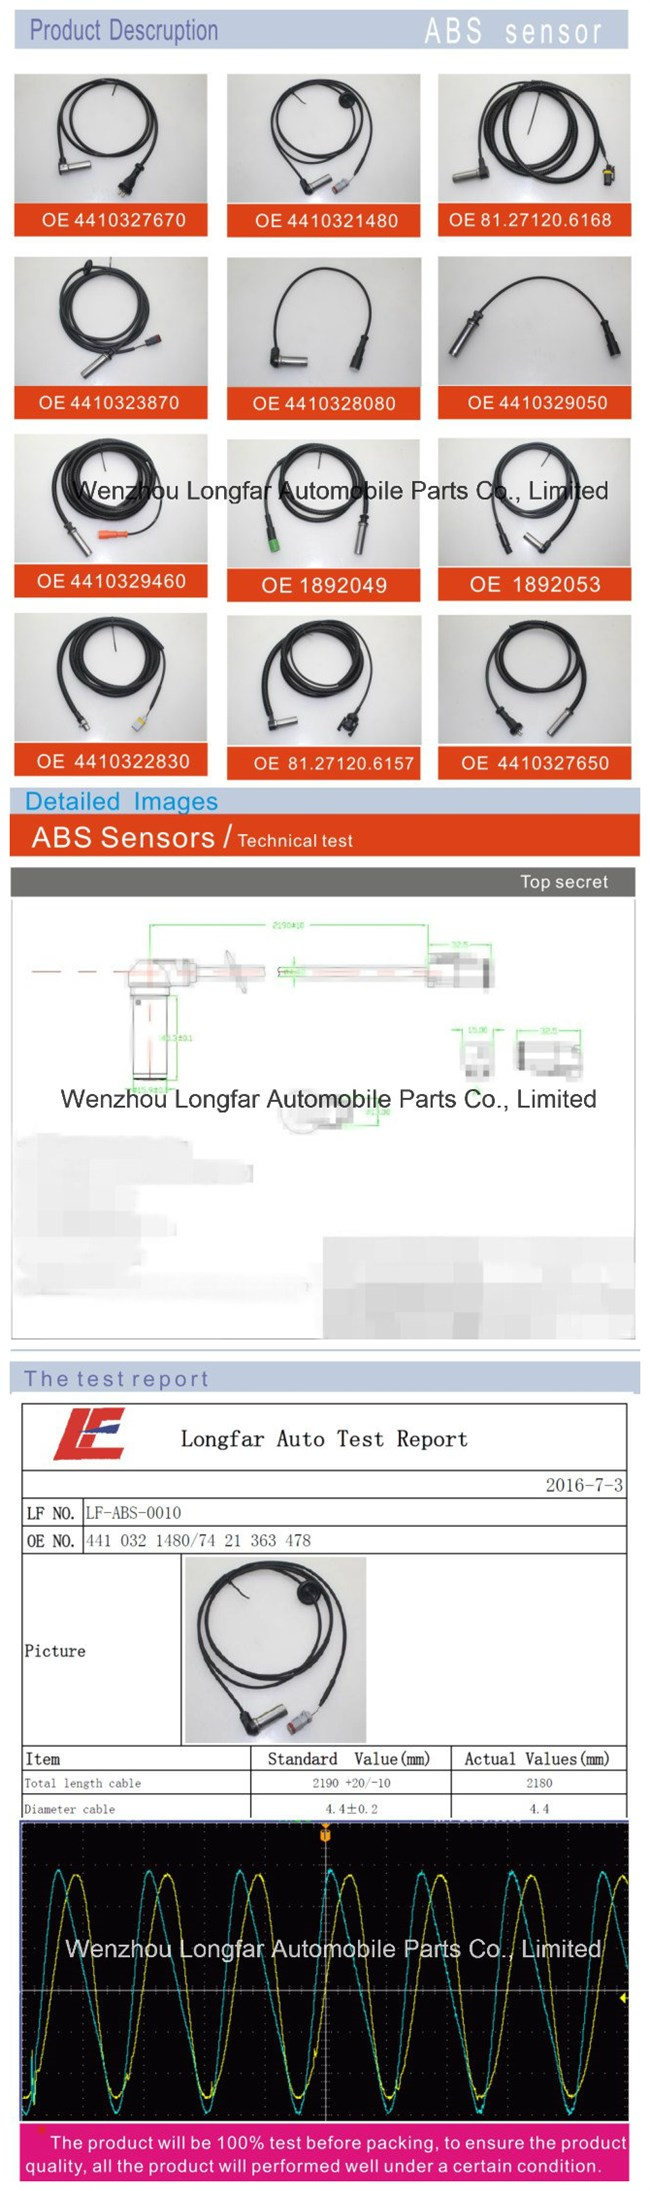 Auto ABS Sensor Anti-Lock Braking System Transducer Indicator Sensor 4410329080,1.21614,041.307,85-50535-Sx,04.42.042 for Mercedes-Benz,Daf,Scania,Wabco,Dt